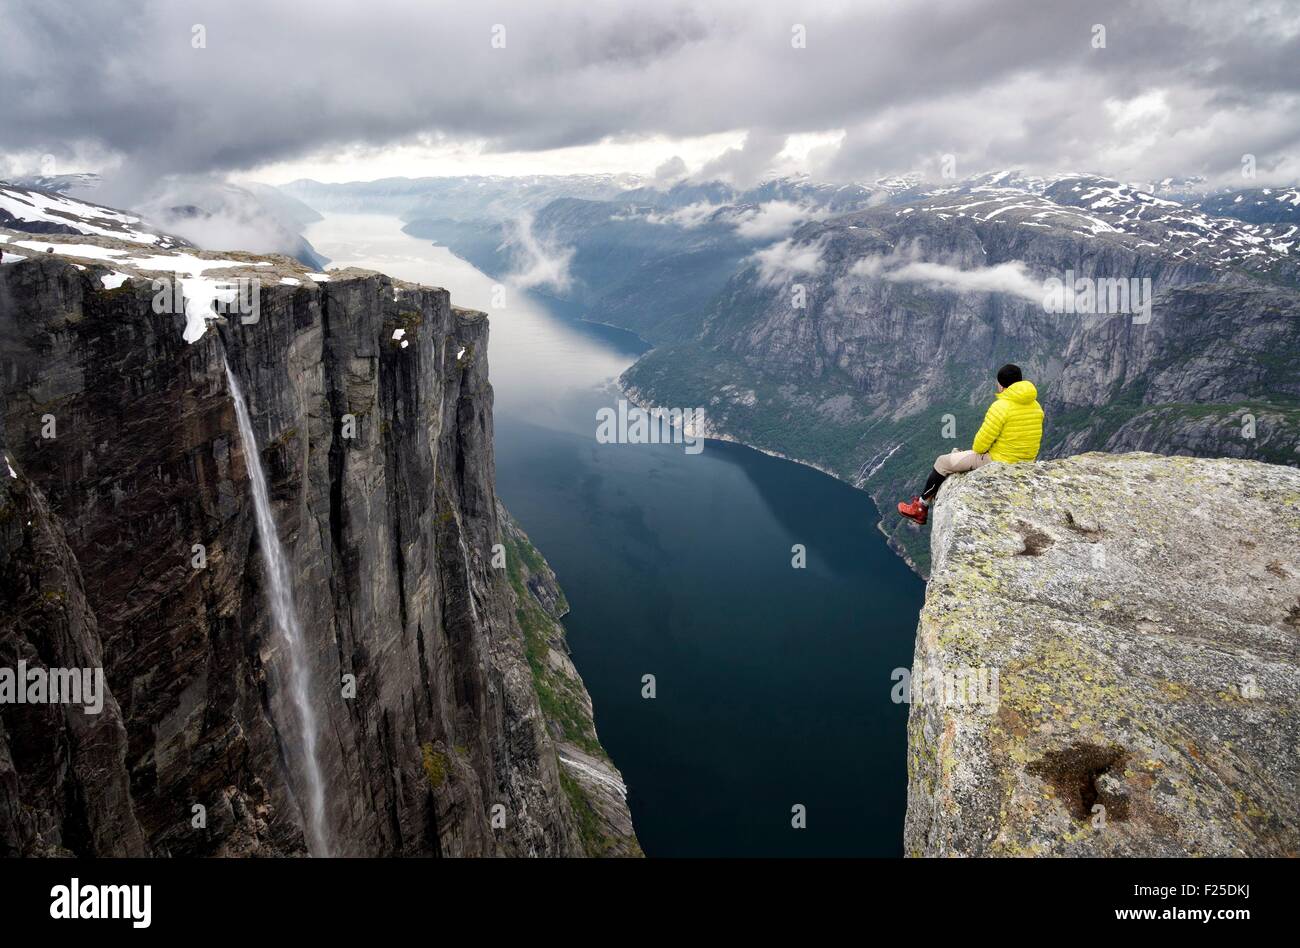 Norway, Rogaland, Lysefjord, Kjerag (Kiragg), hiker watching the fjord 1000m below Stock Photo